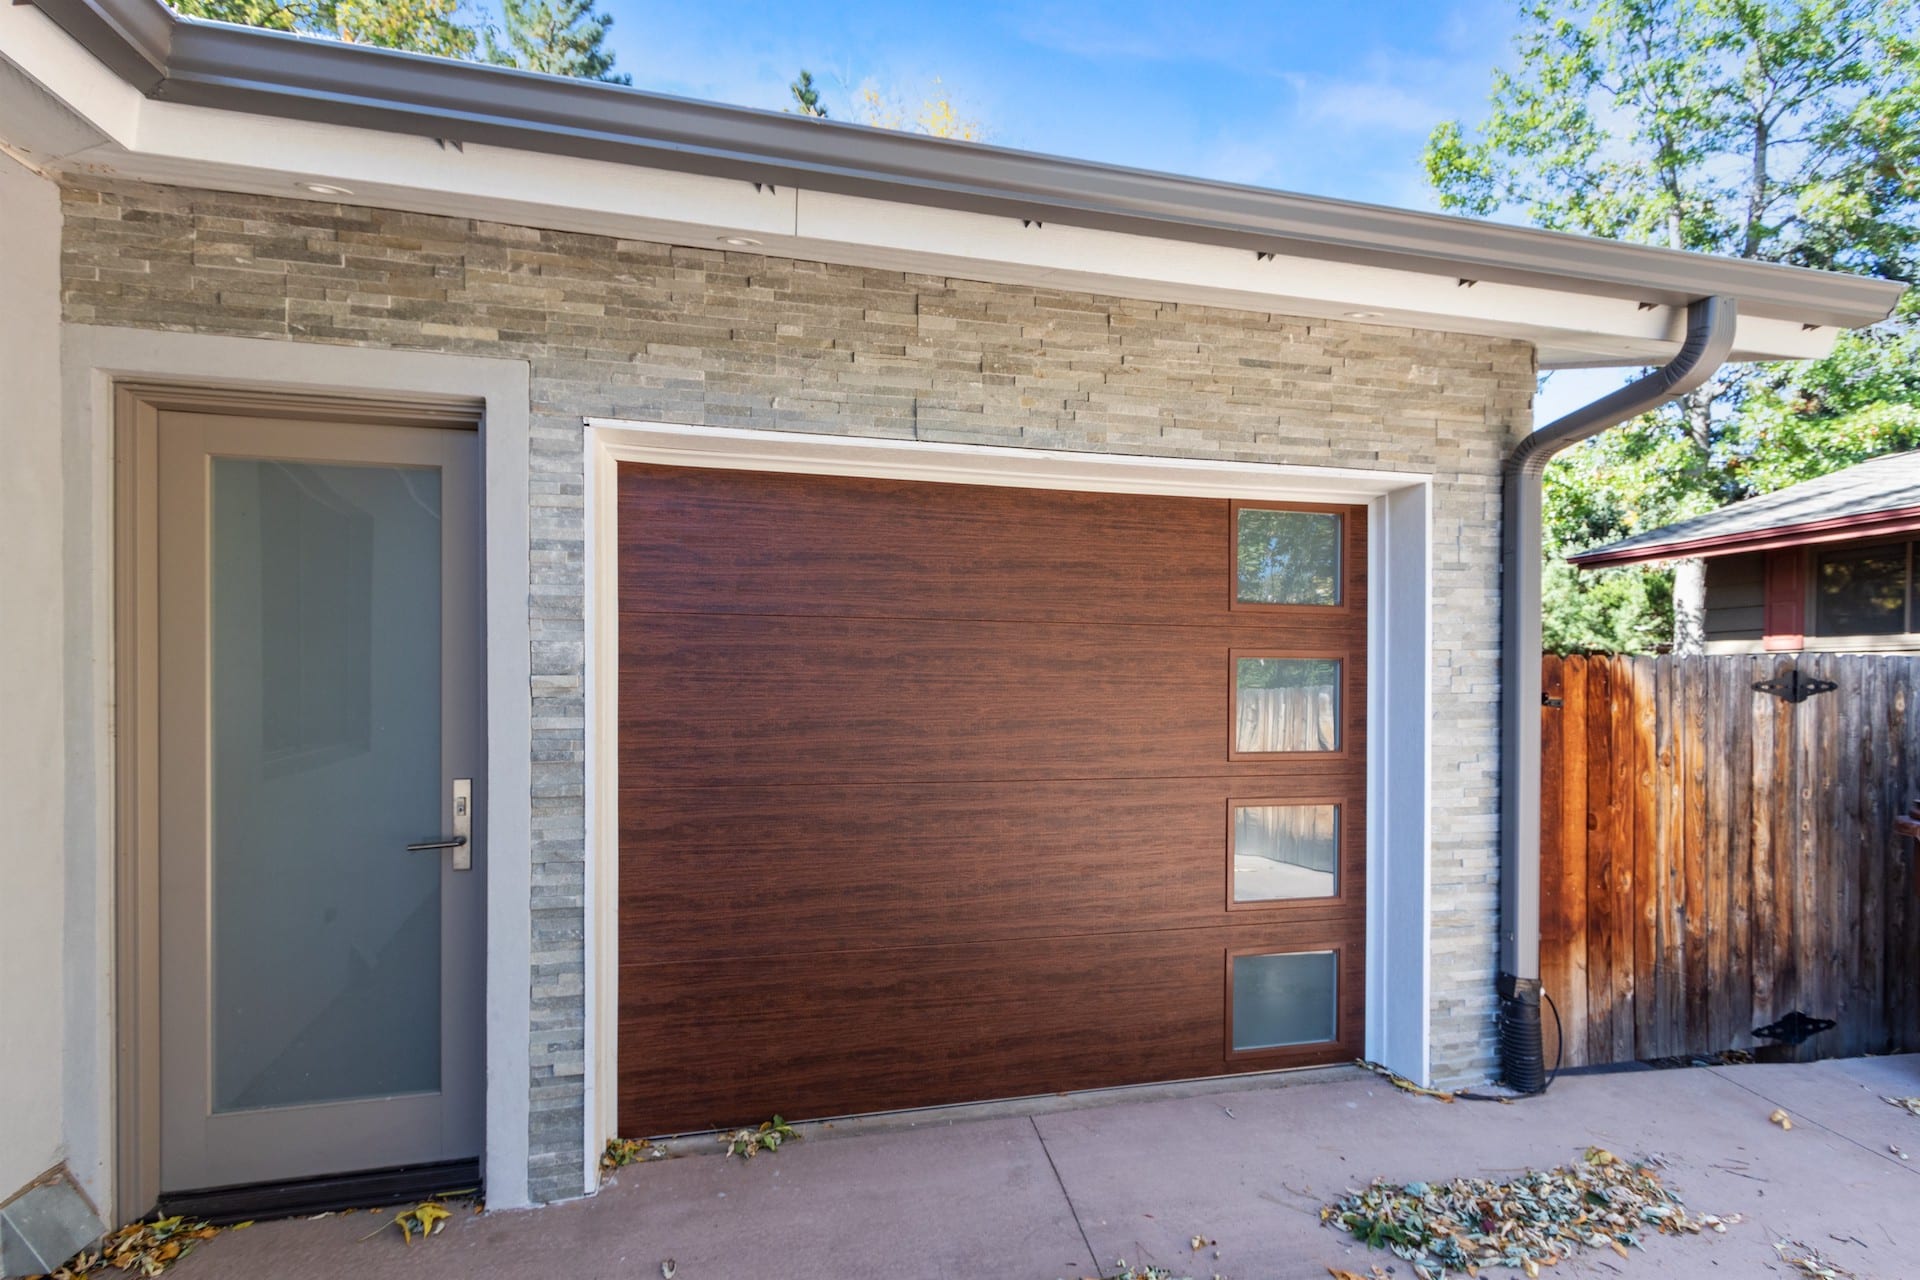 Stone Veneer Siding - Garage Door Accent installed by Northern Lights Exteriors